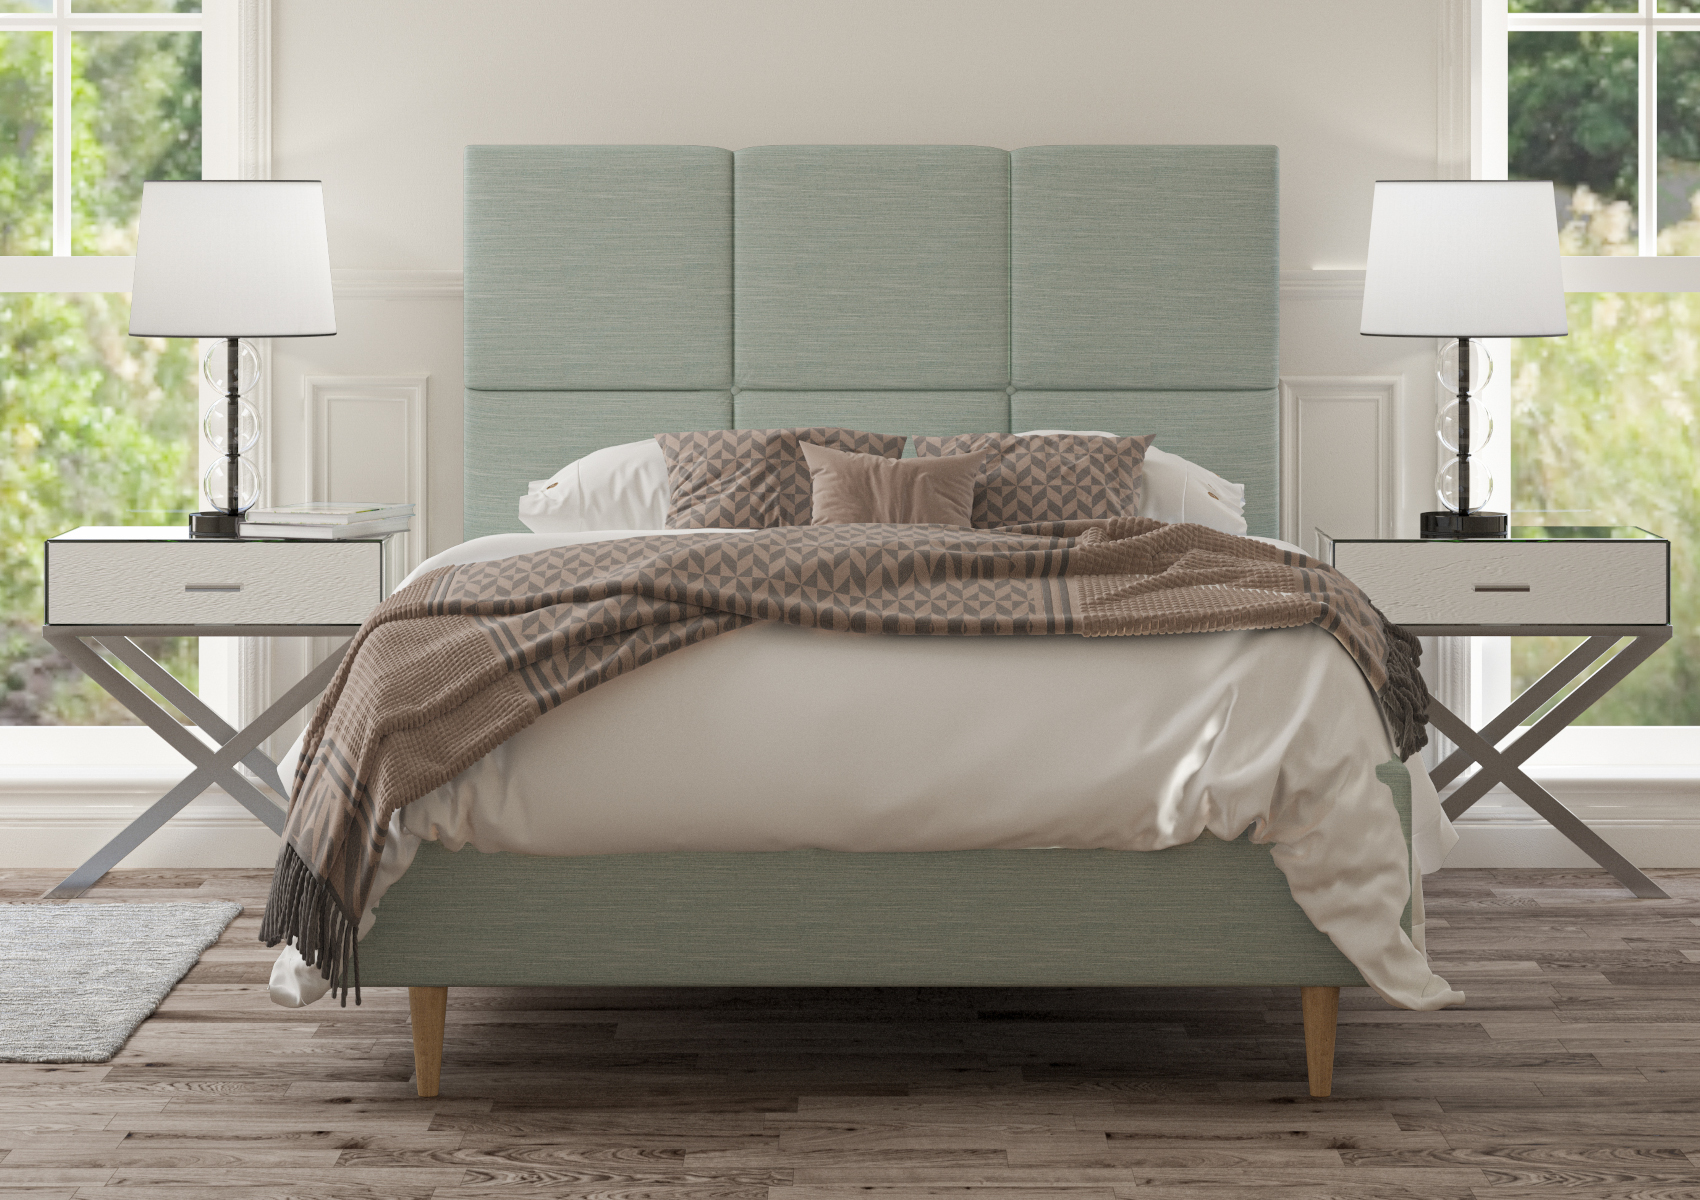 View Lauren Linea SeaBlue Upholstered Super King Bed Time4Sleep information